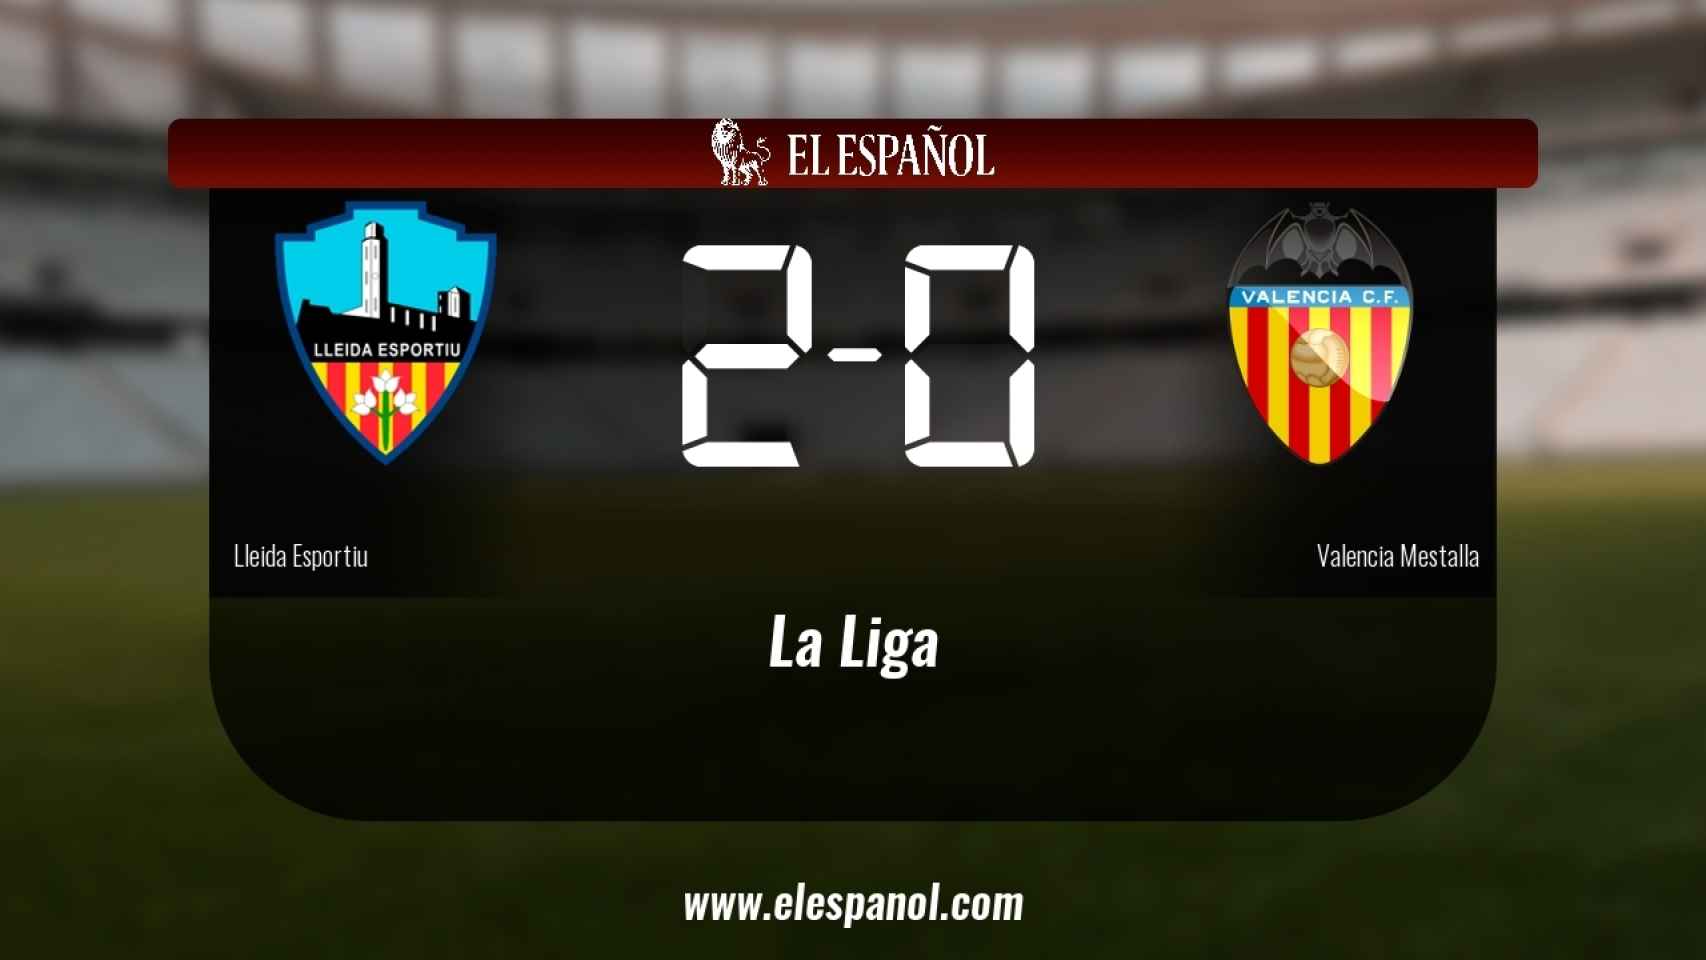 Victoria 2-0 del Lleida Esportiu frente al Valencia Mestalla